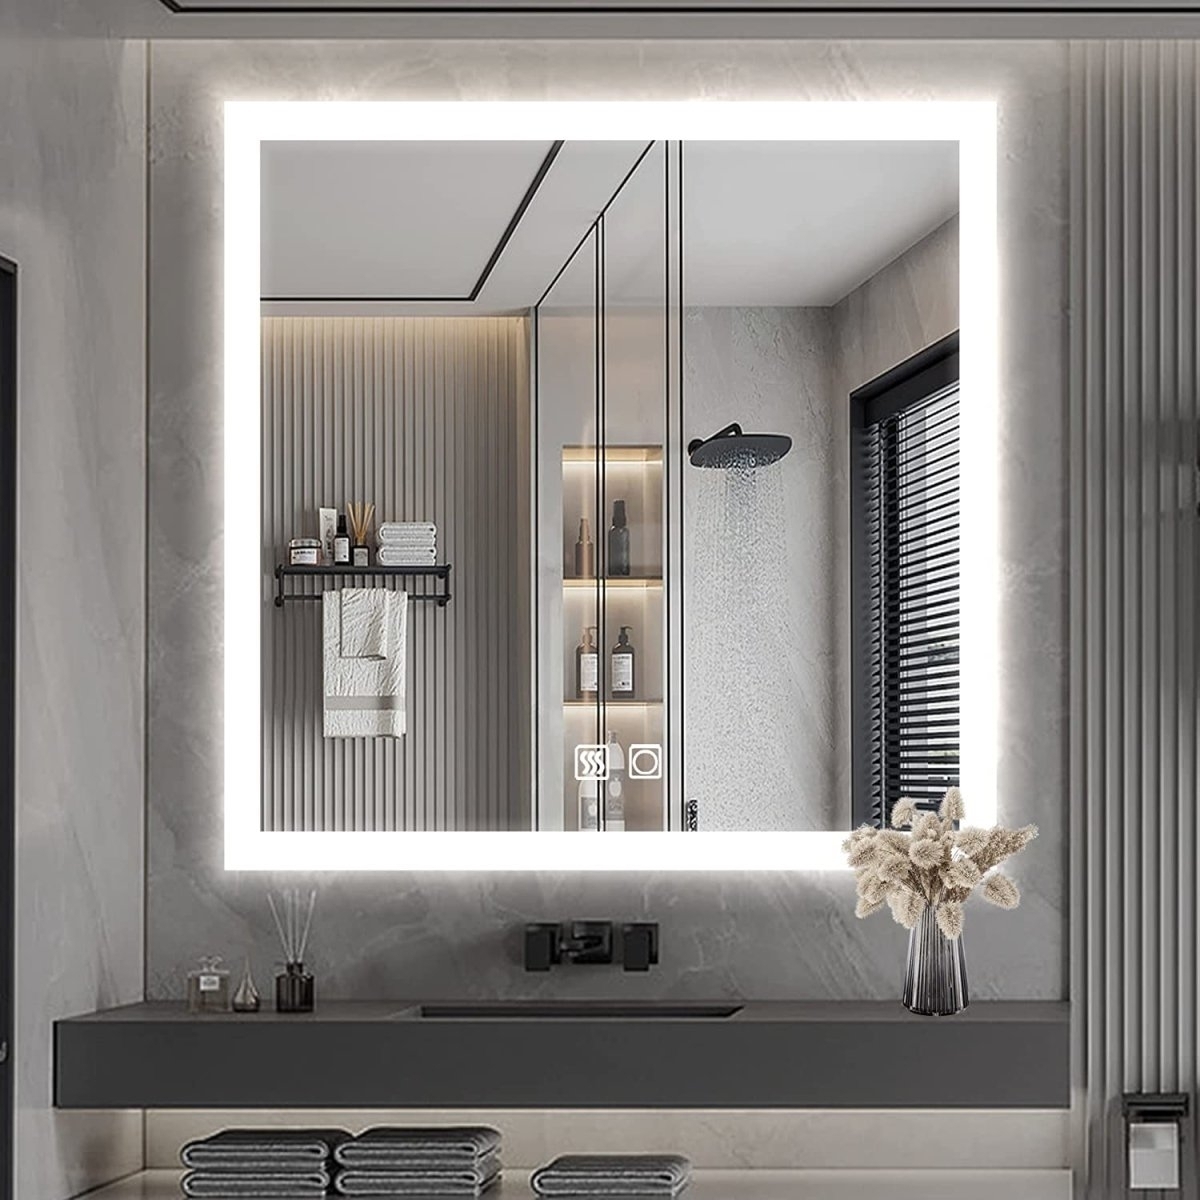 ExBrite 35 x 35 inch Square Backlit LED Lighted Bathroom Vanity Mirror